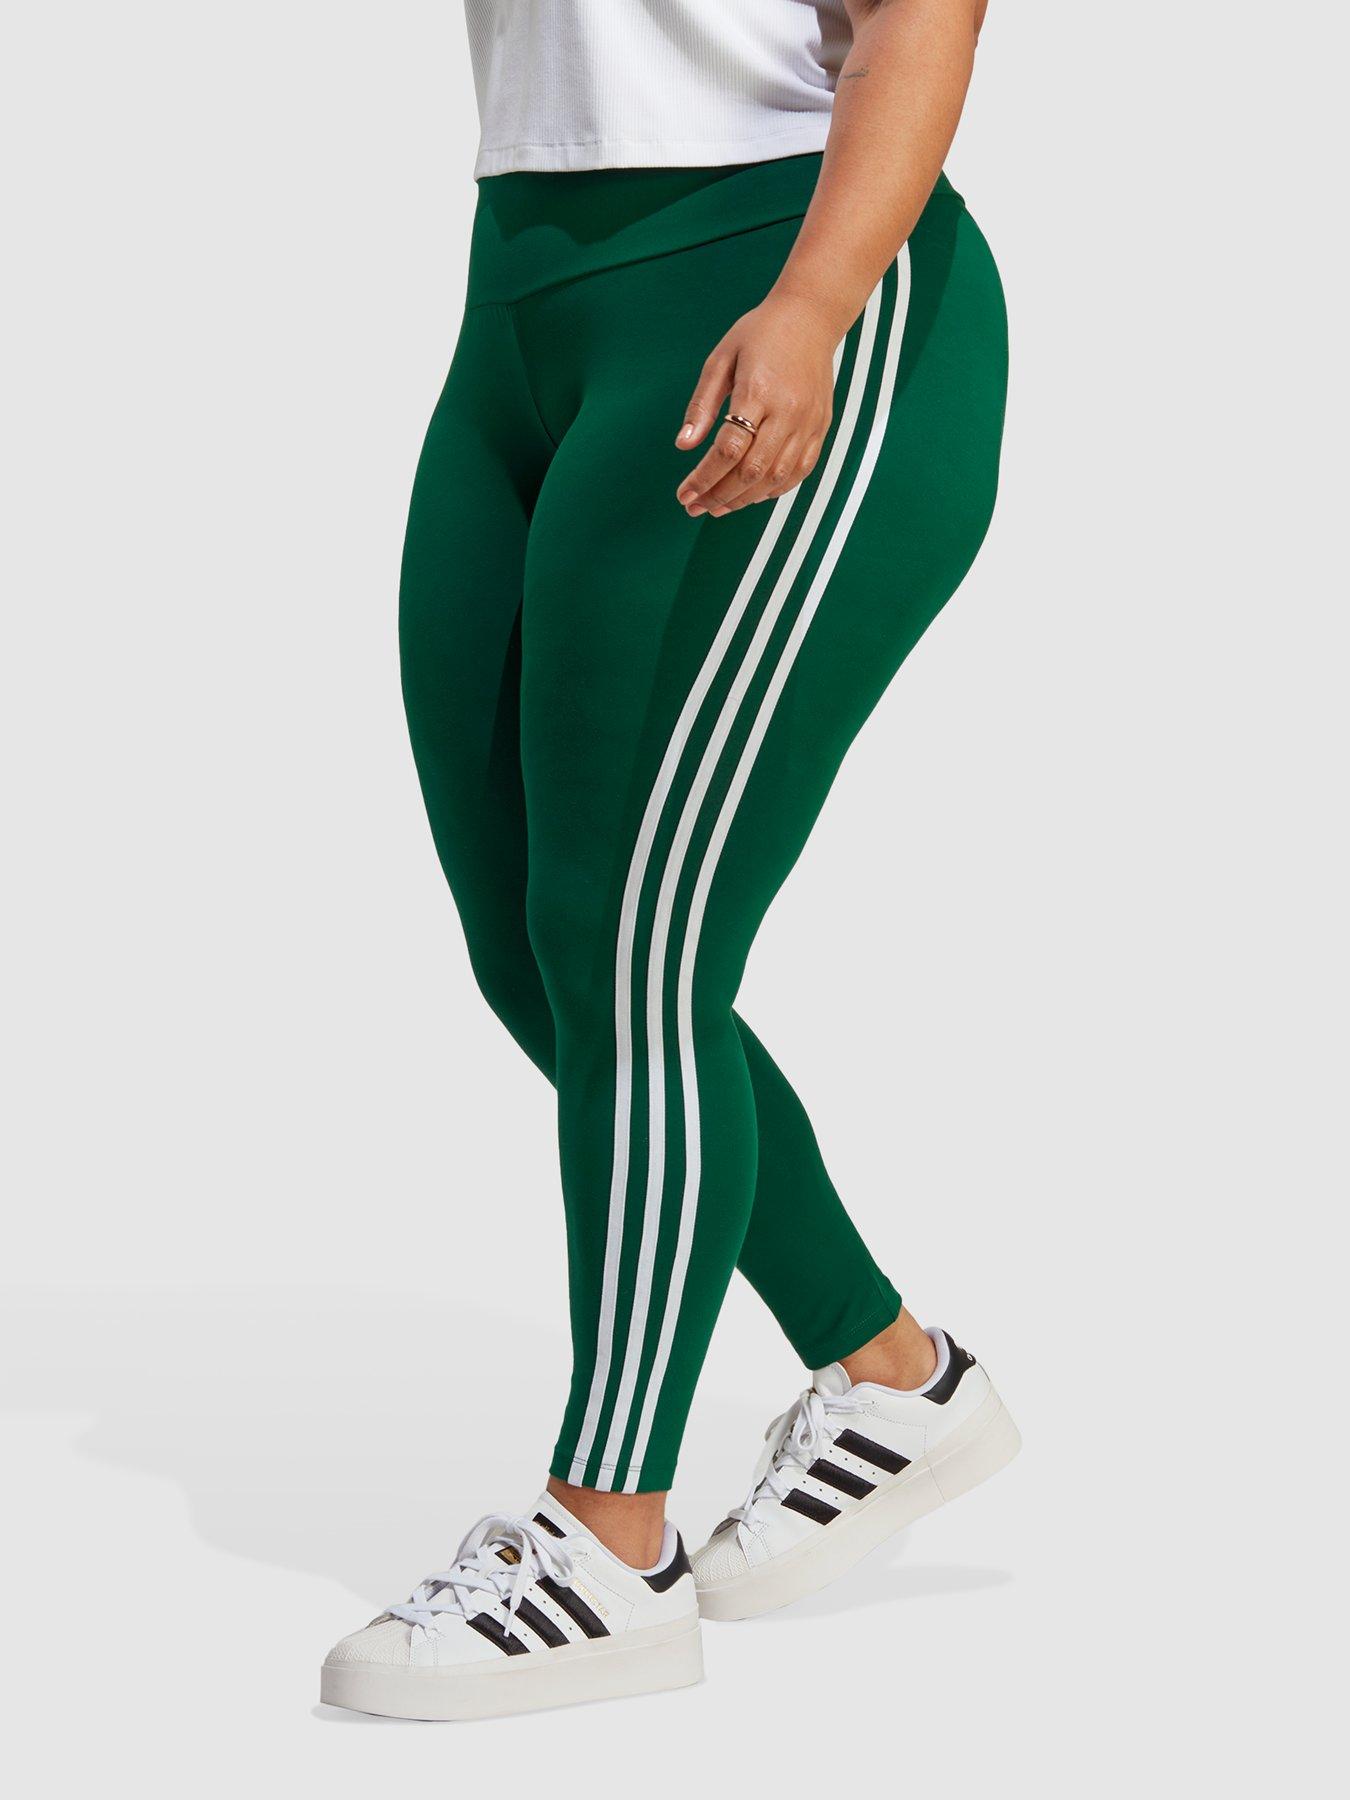 Adidas Women’s Trefoil & 3 Stripes Leggings Black Grey Size 8 10 12 14